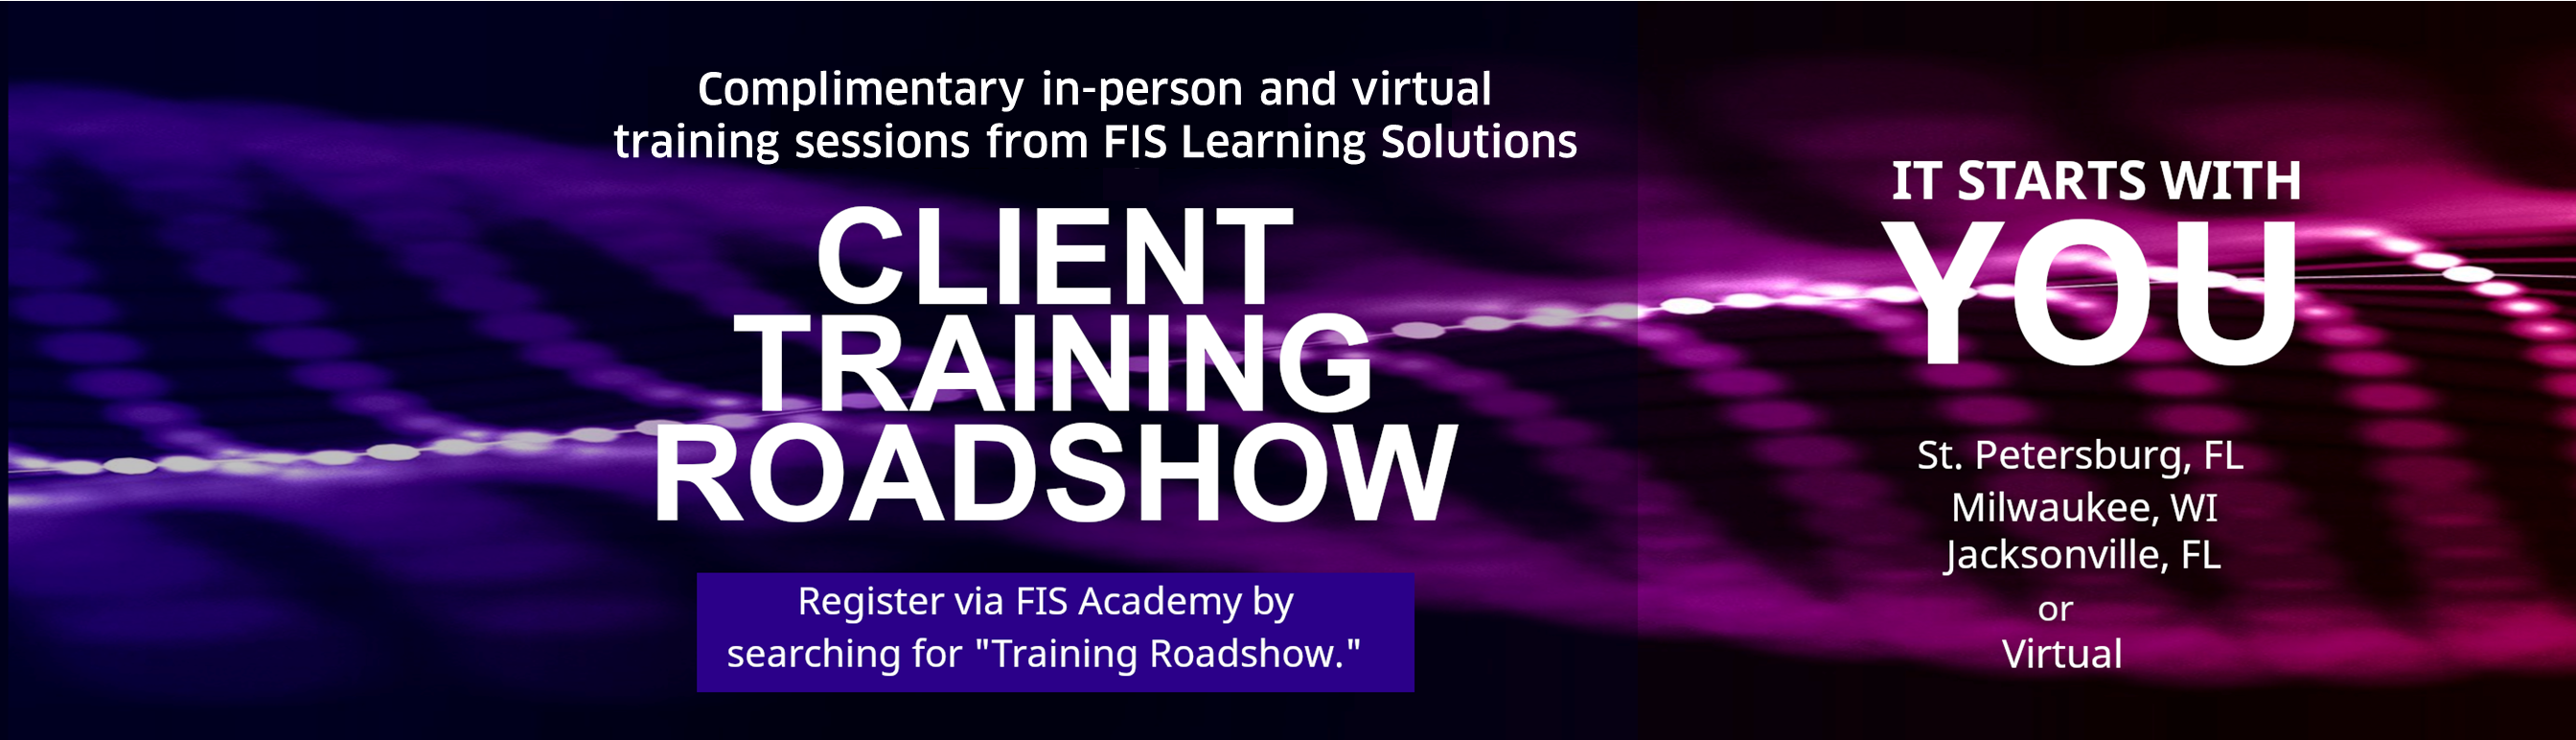 Client Training Roadshow 